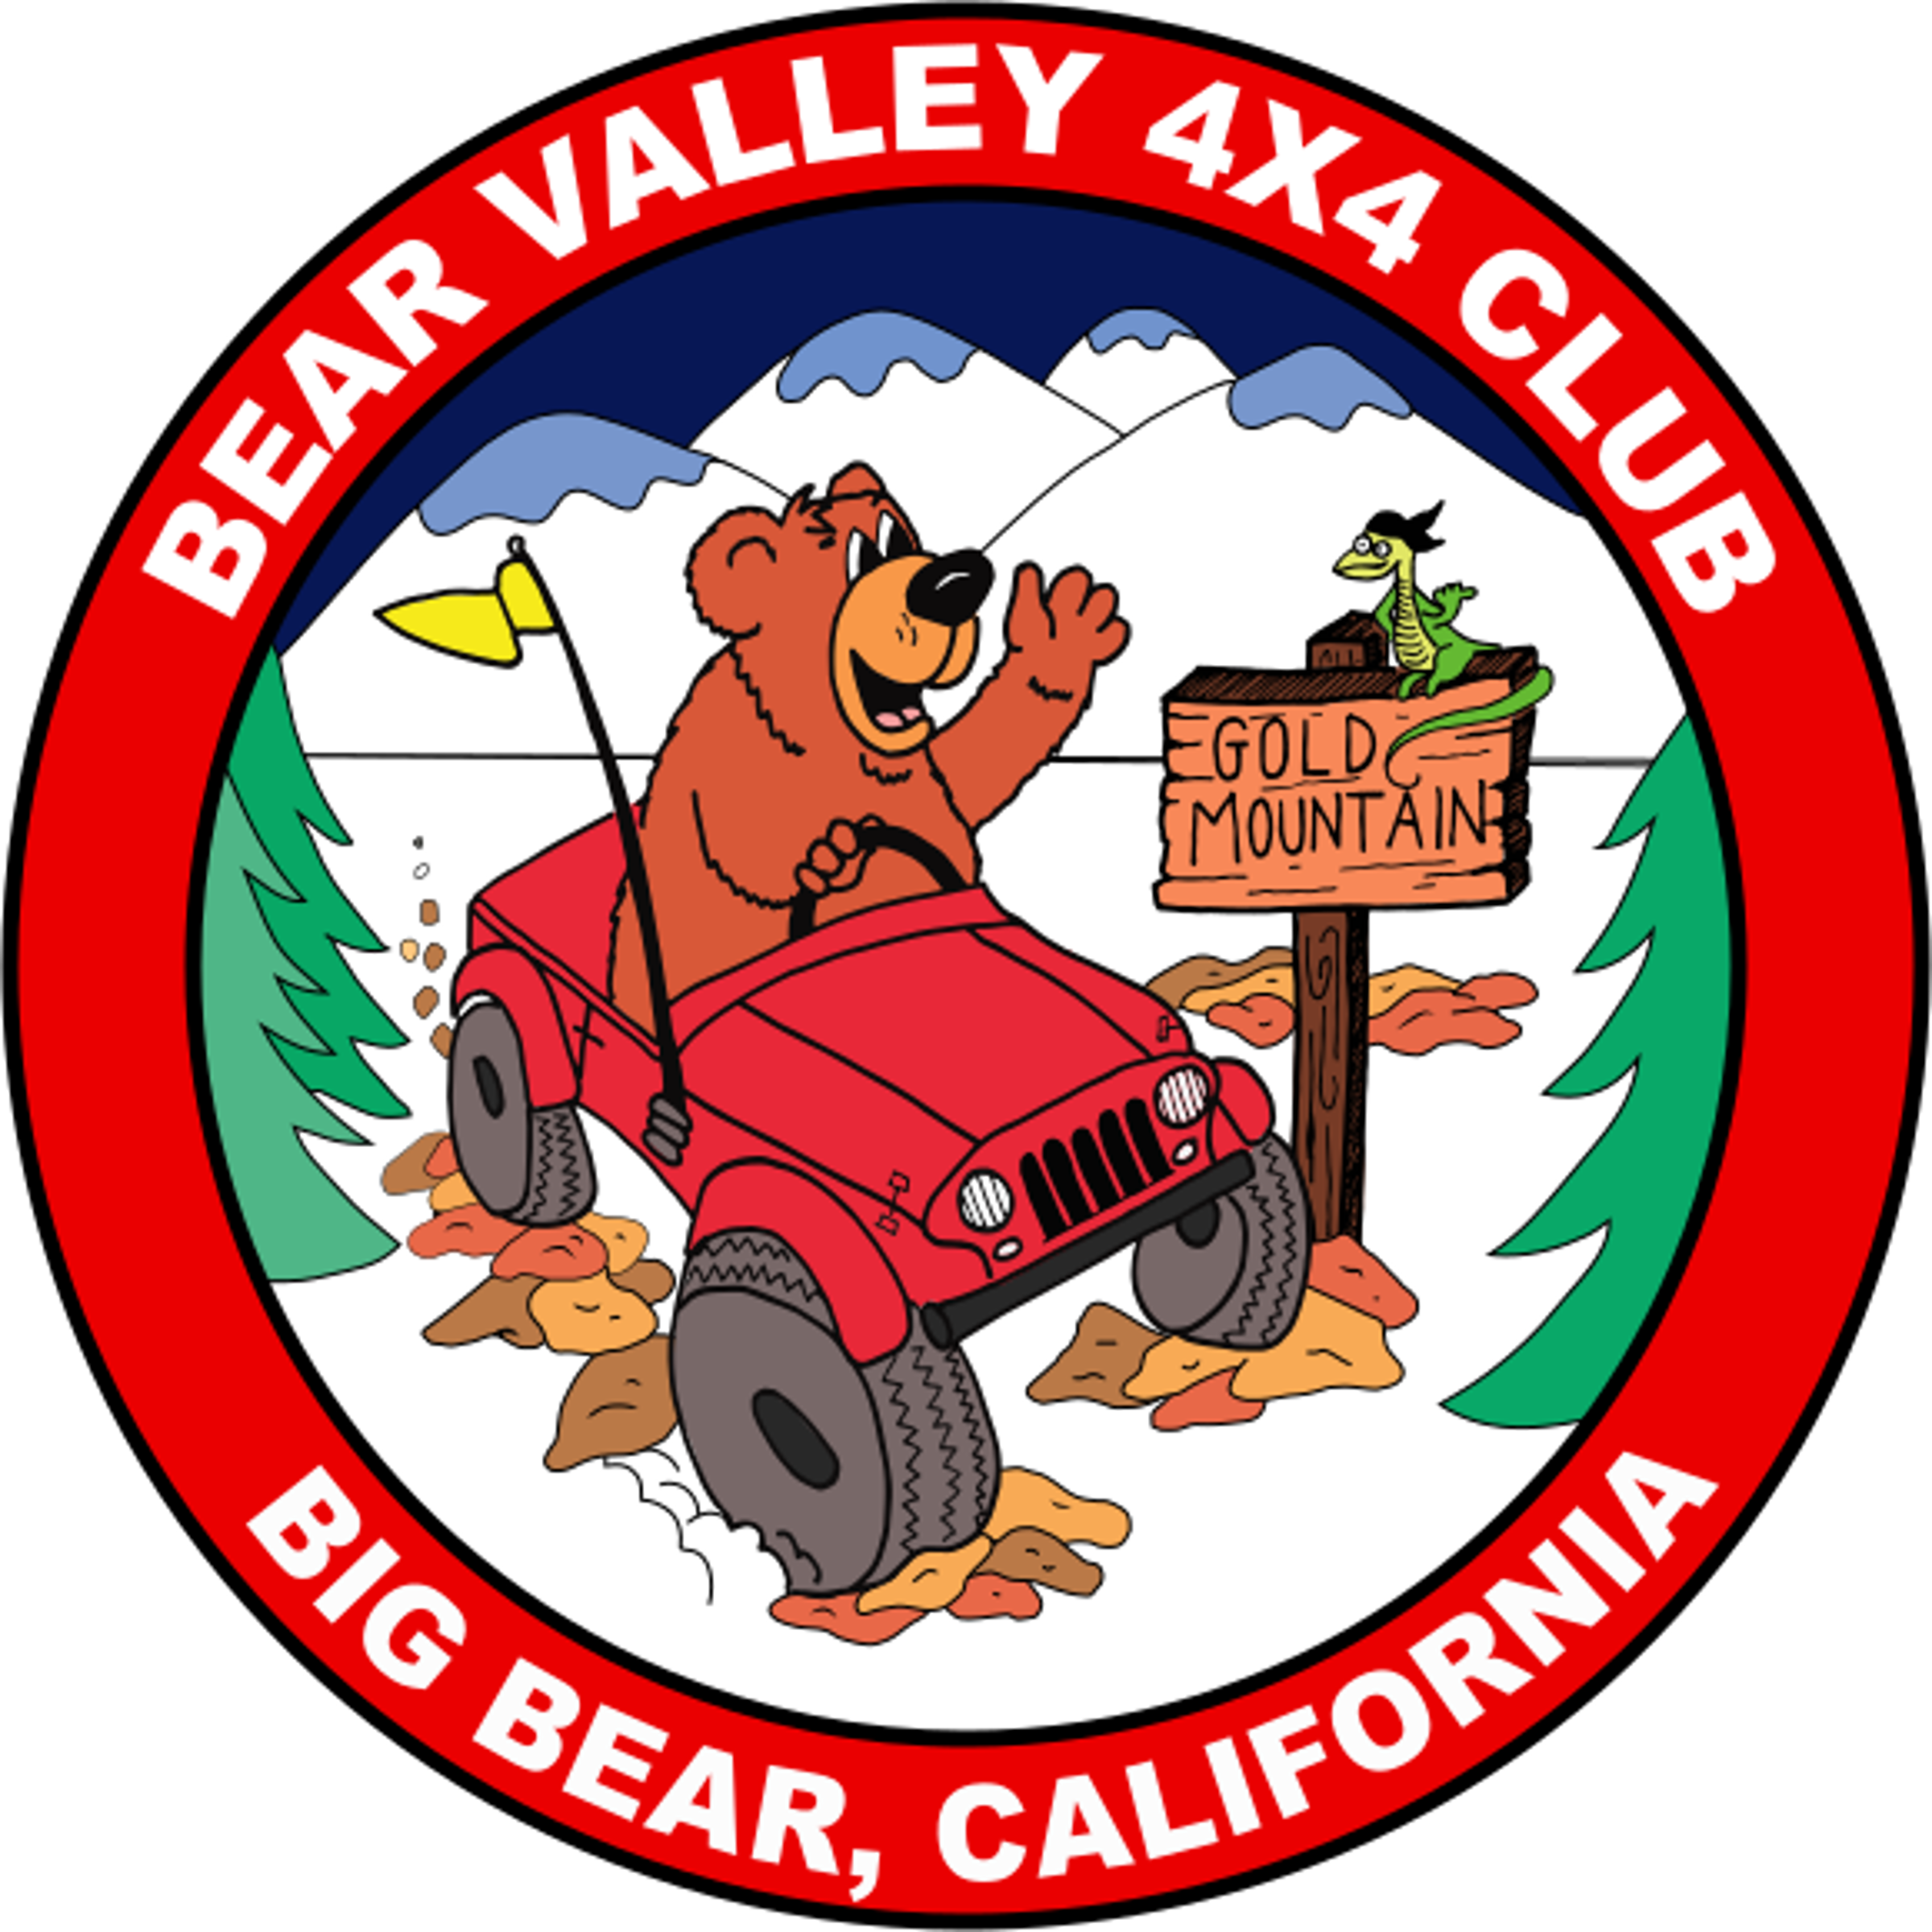 Bear Valley 4x4